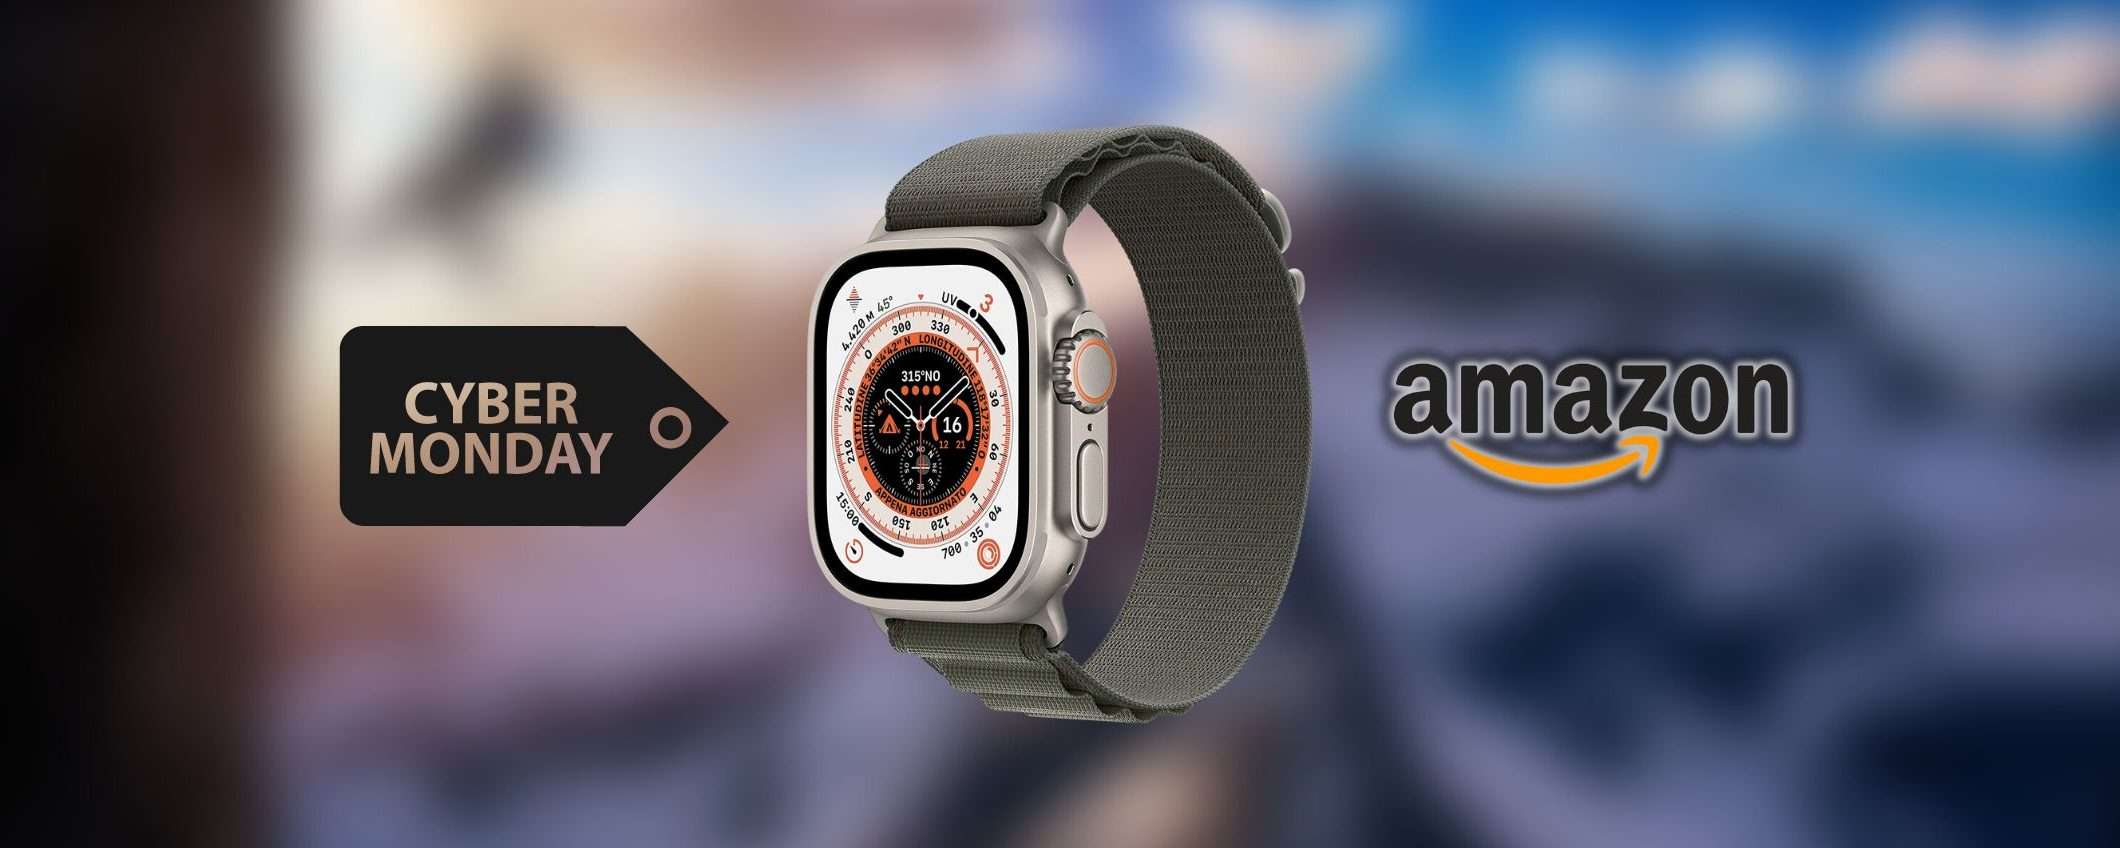 Apple Watch Ultra: offerta da Cyber Monday, risparmi più di 100 euro